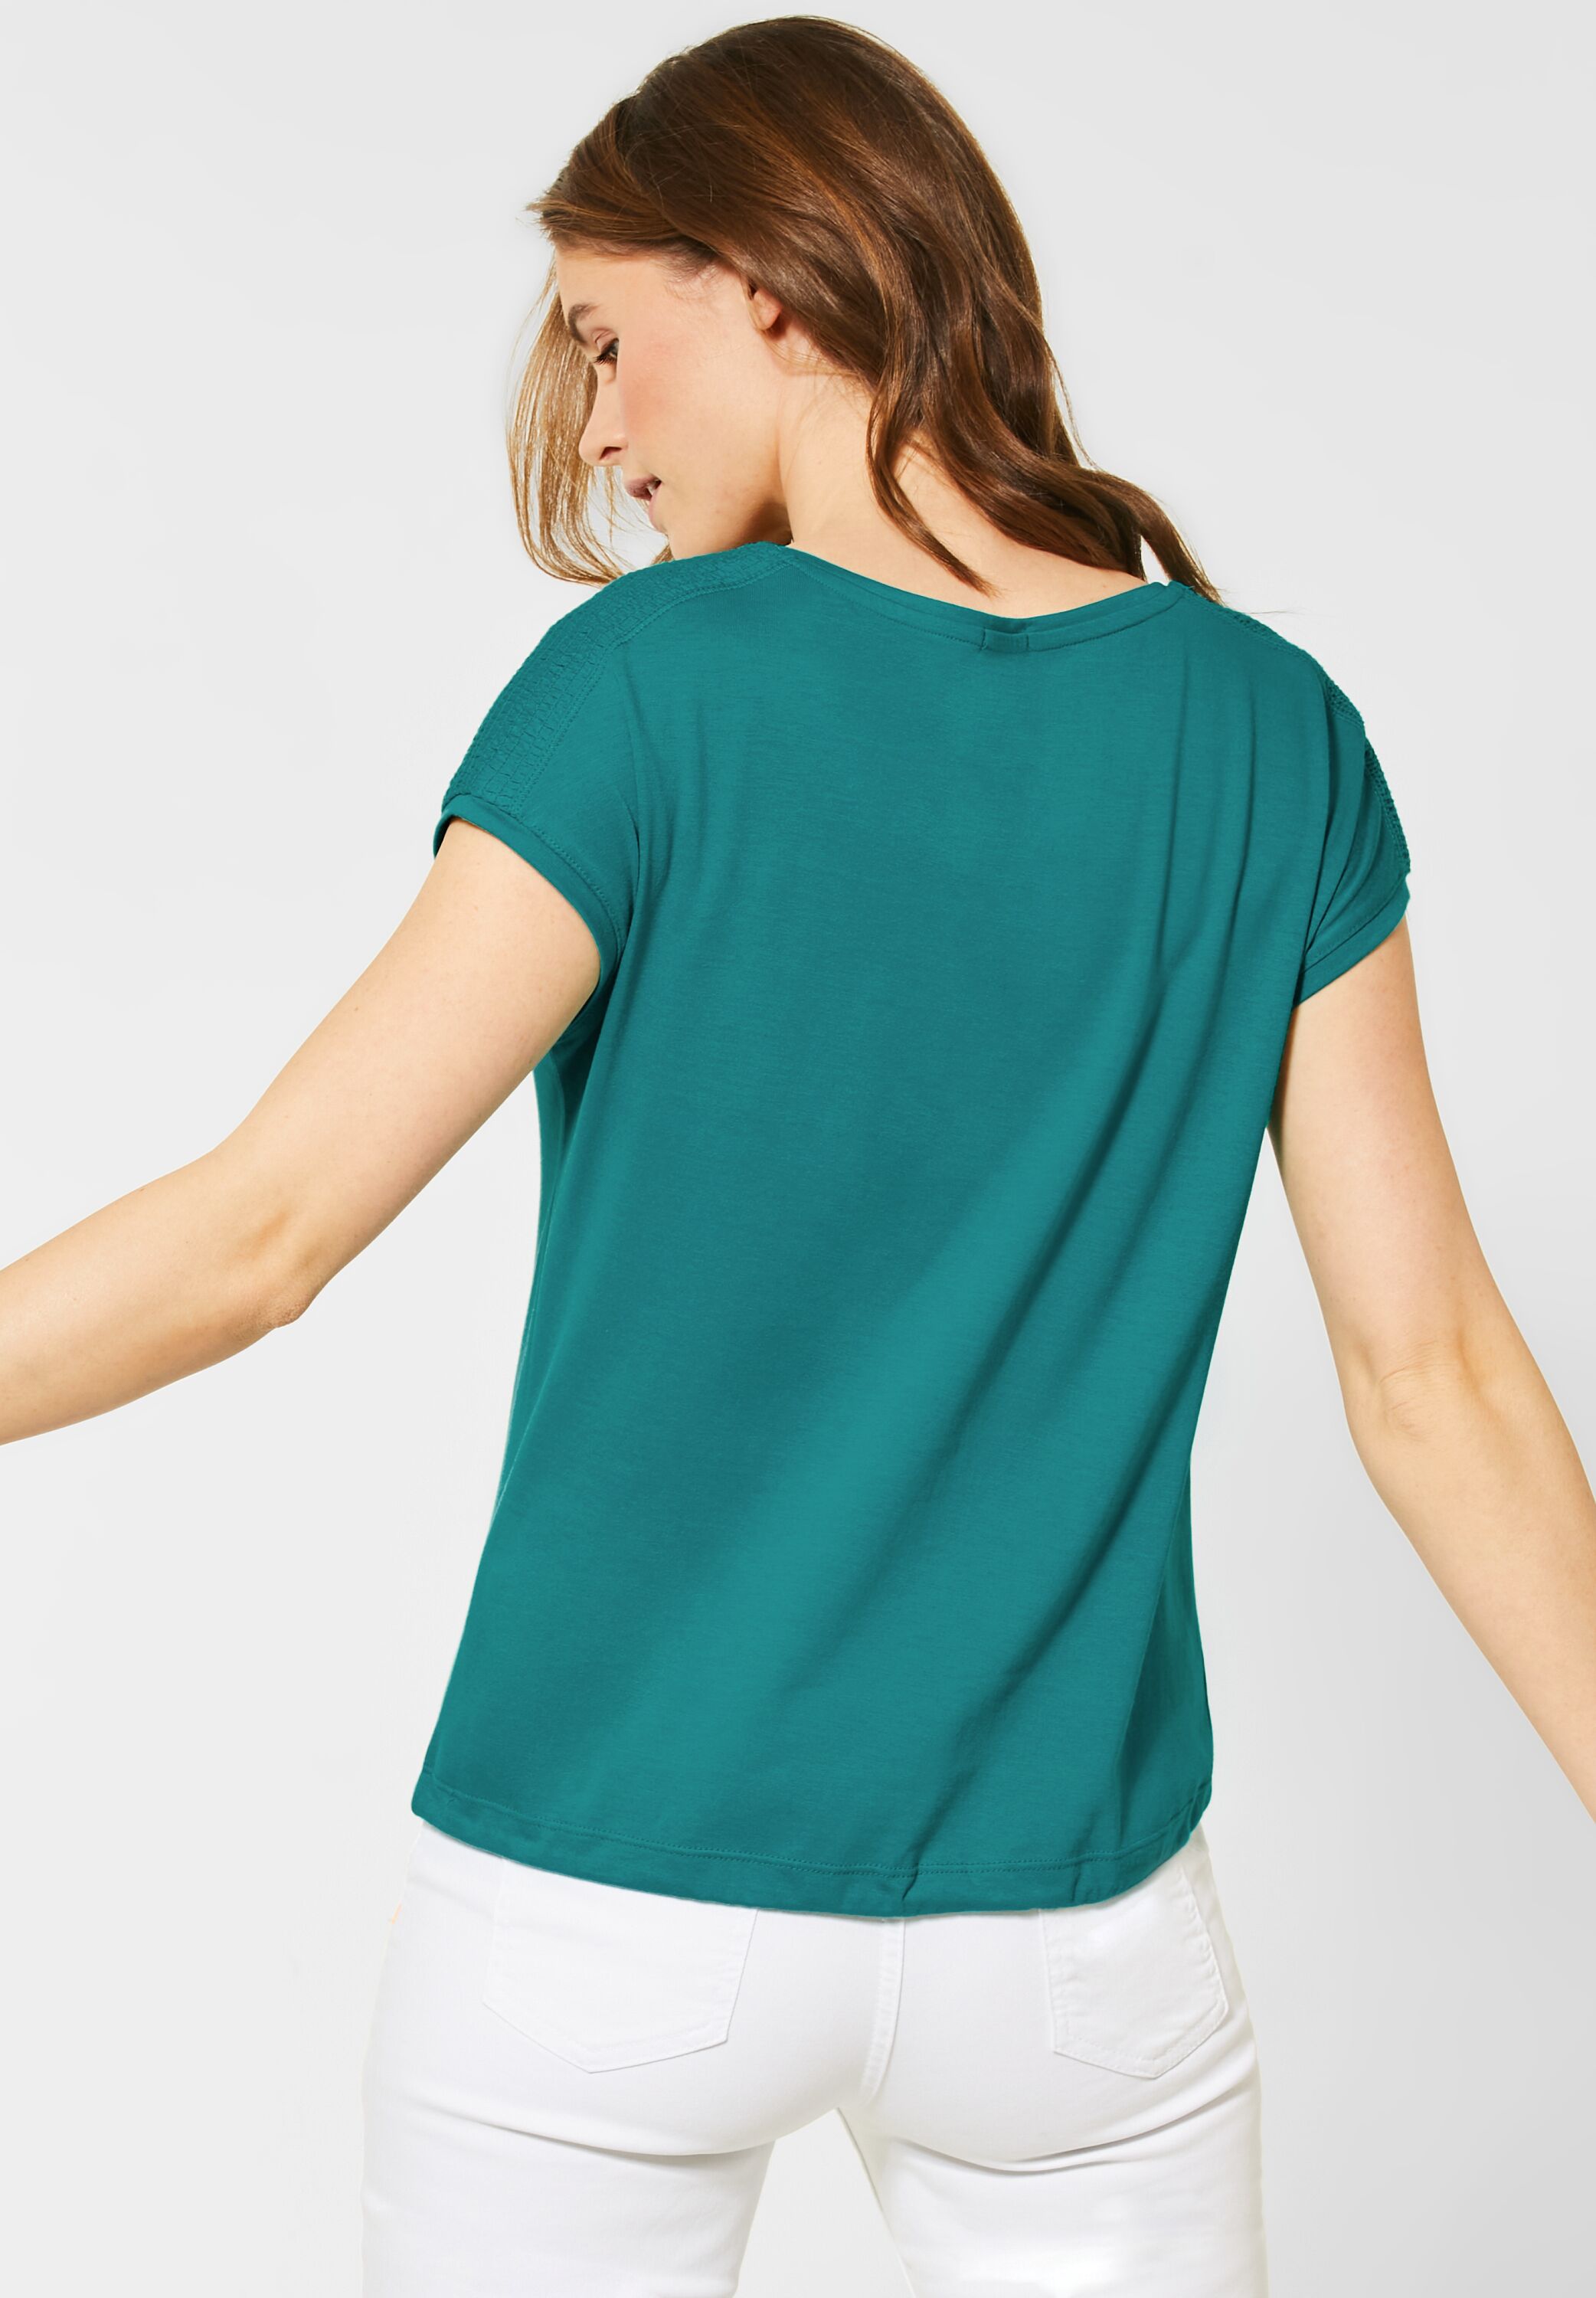 CECIL T-Shirt in Vital Emerald Green im SALE reduziert B314828-12291 -  CONCEPT Mode